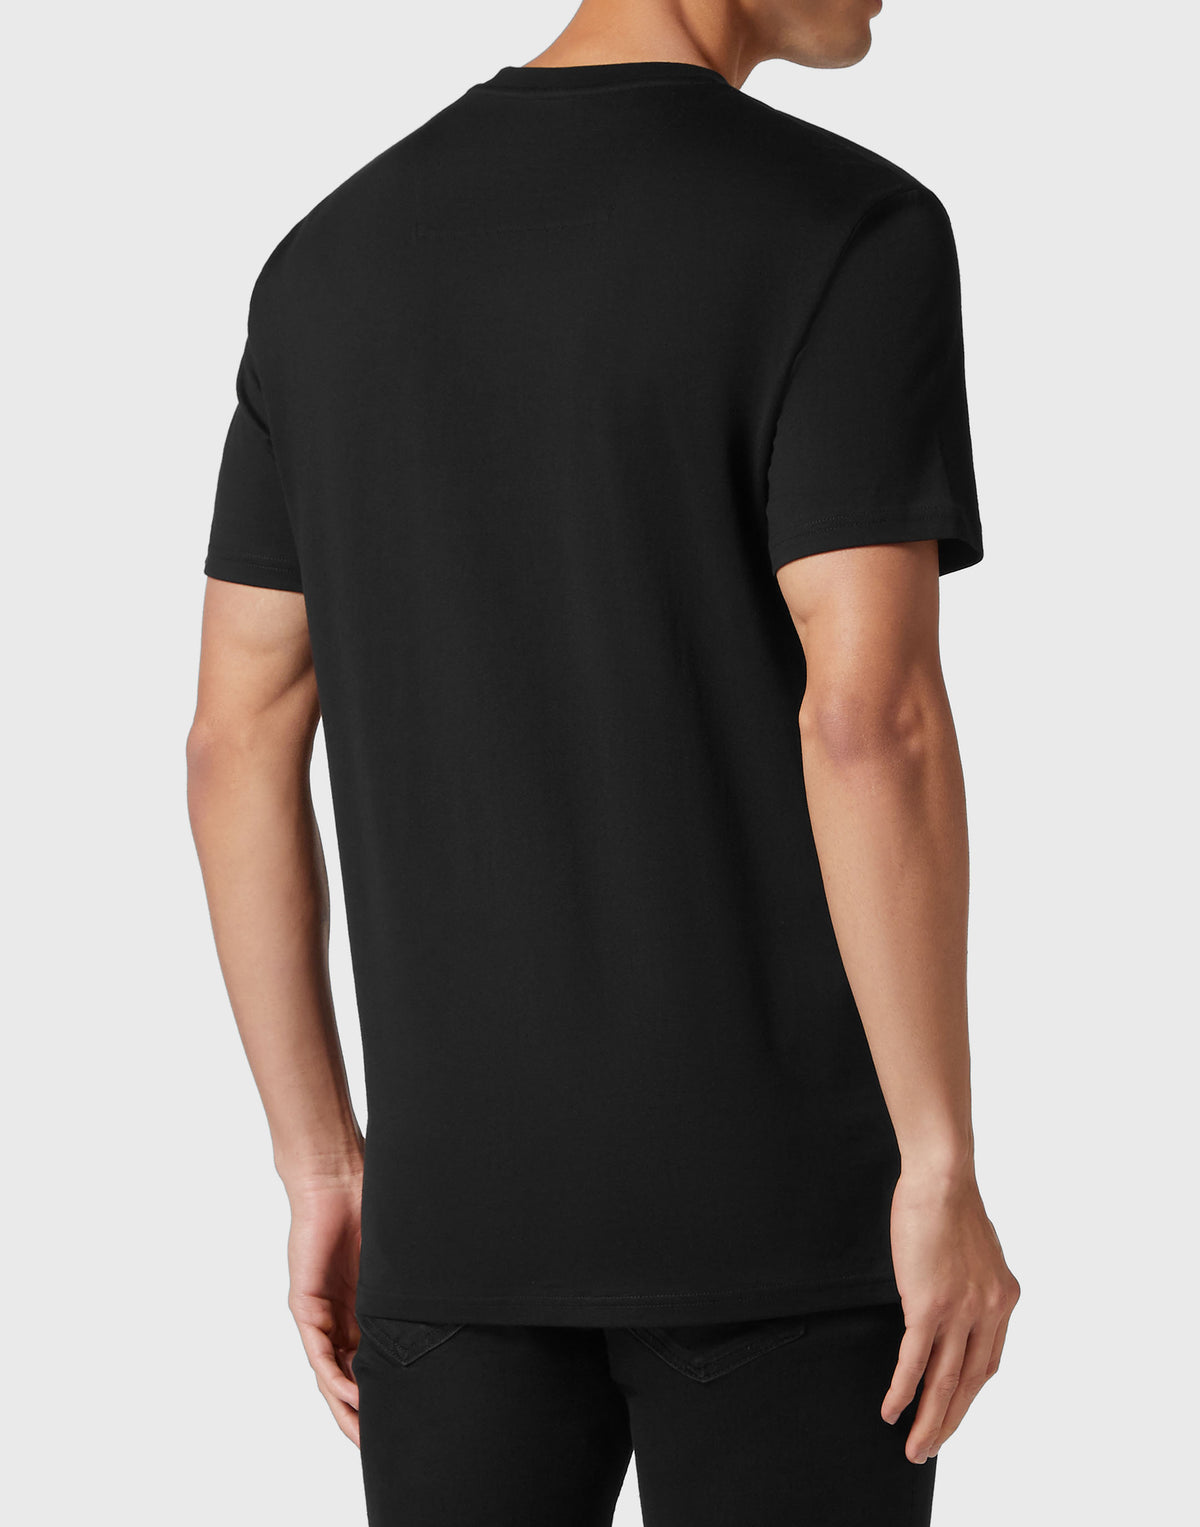 T-shirt Round Neck SS Iconic Plein black